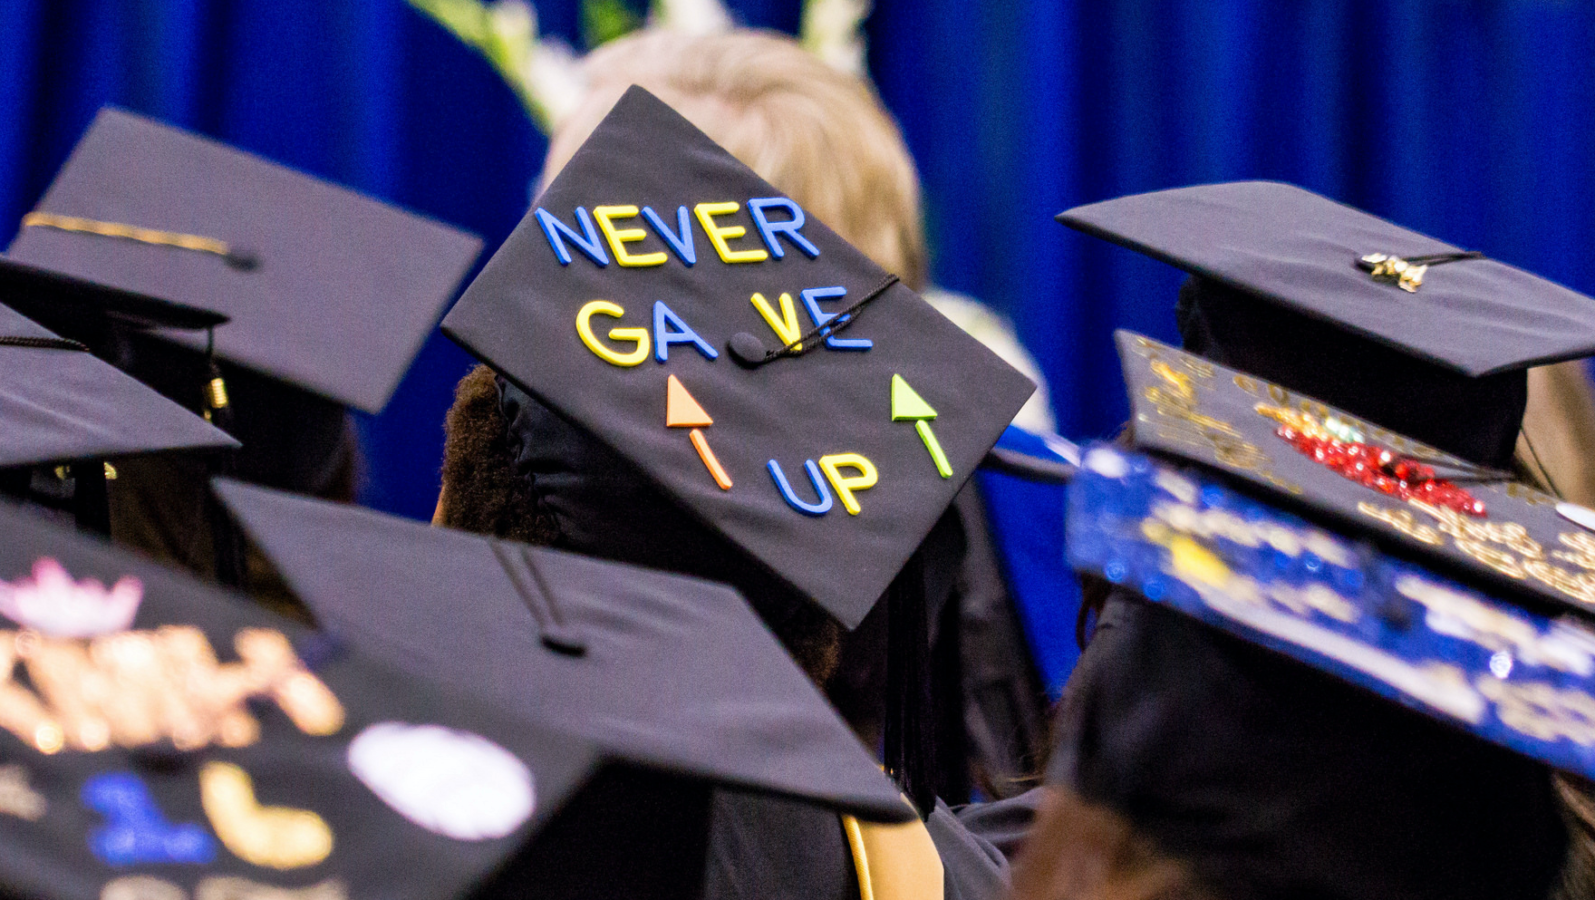 graduation cap with phrase 